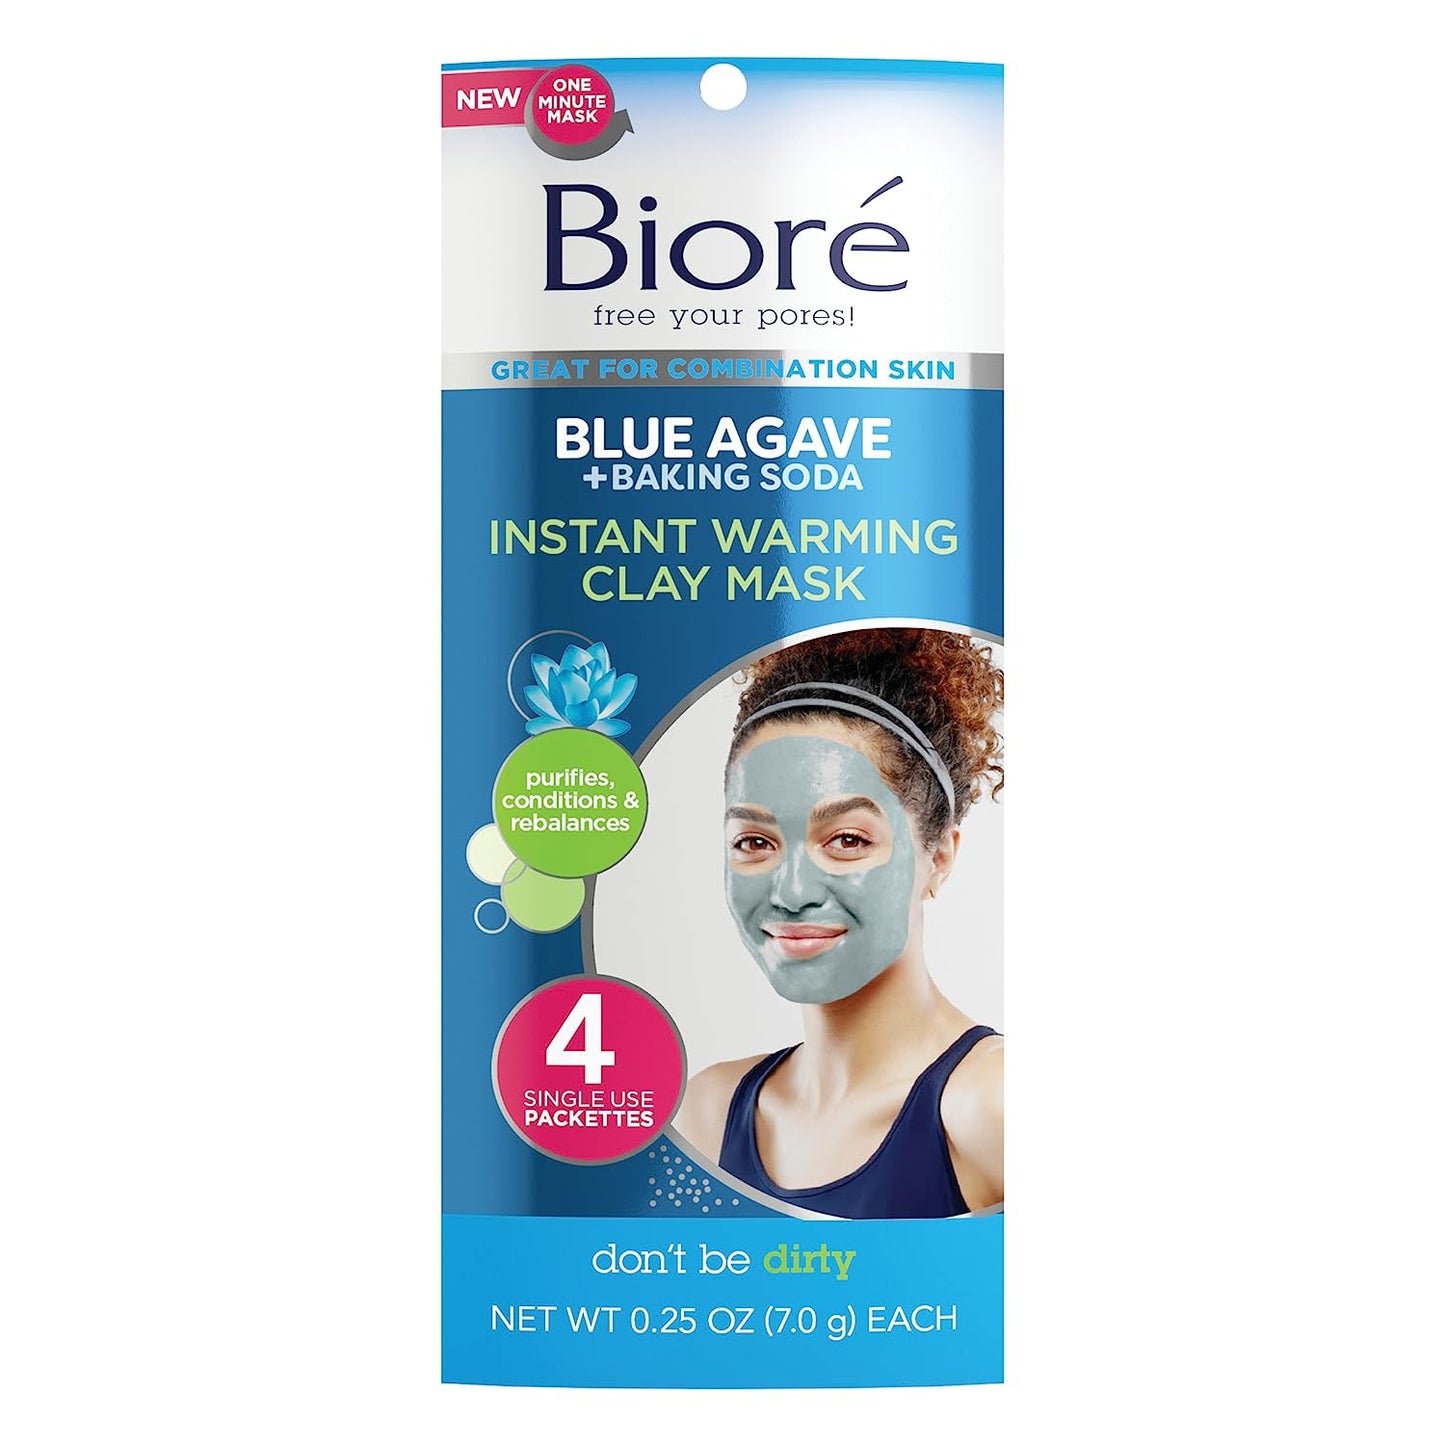 Bioré Blue Agave & Baking Soda Instant Warming Clay Mask 4 Packettes 0.25oz/7g Each